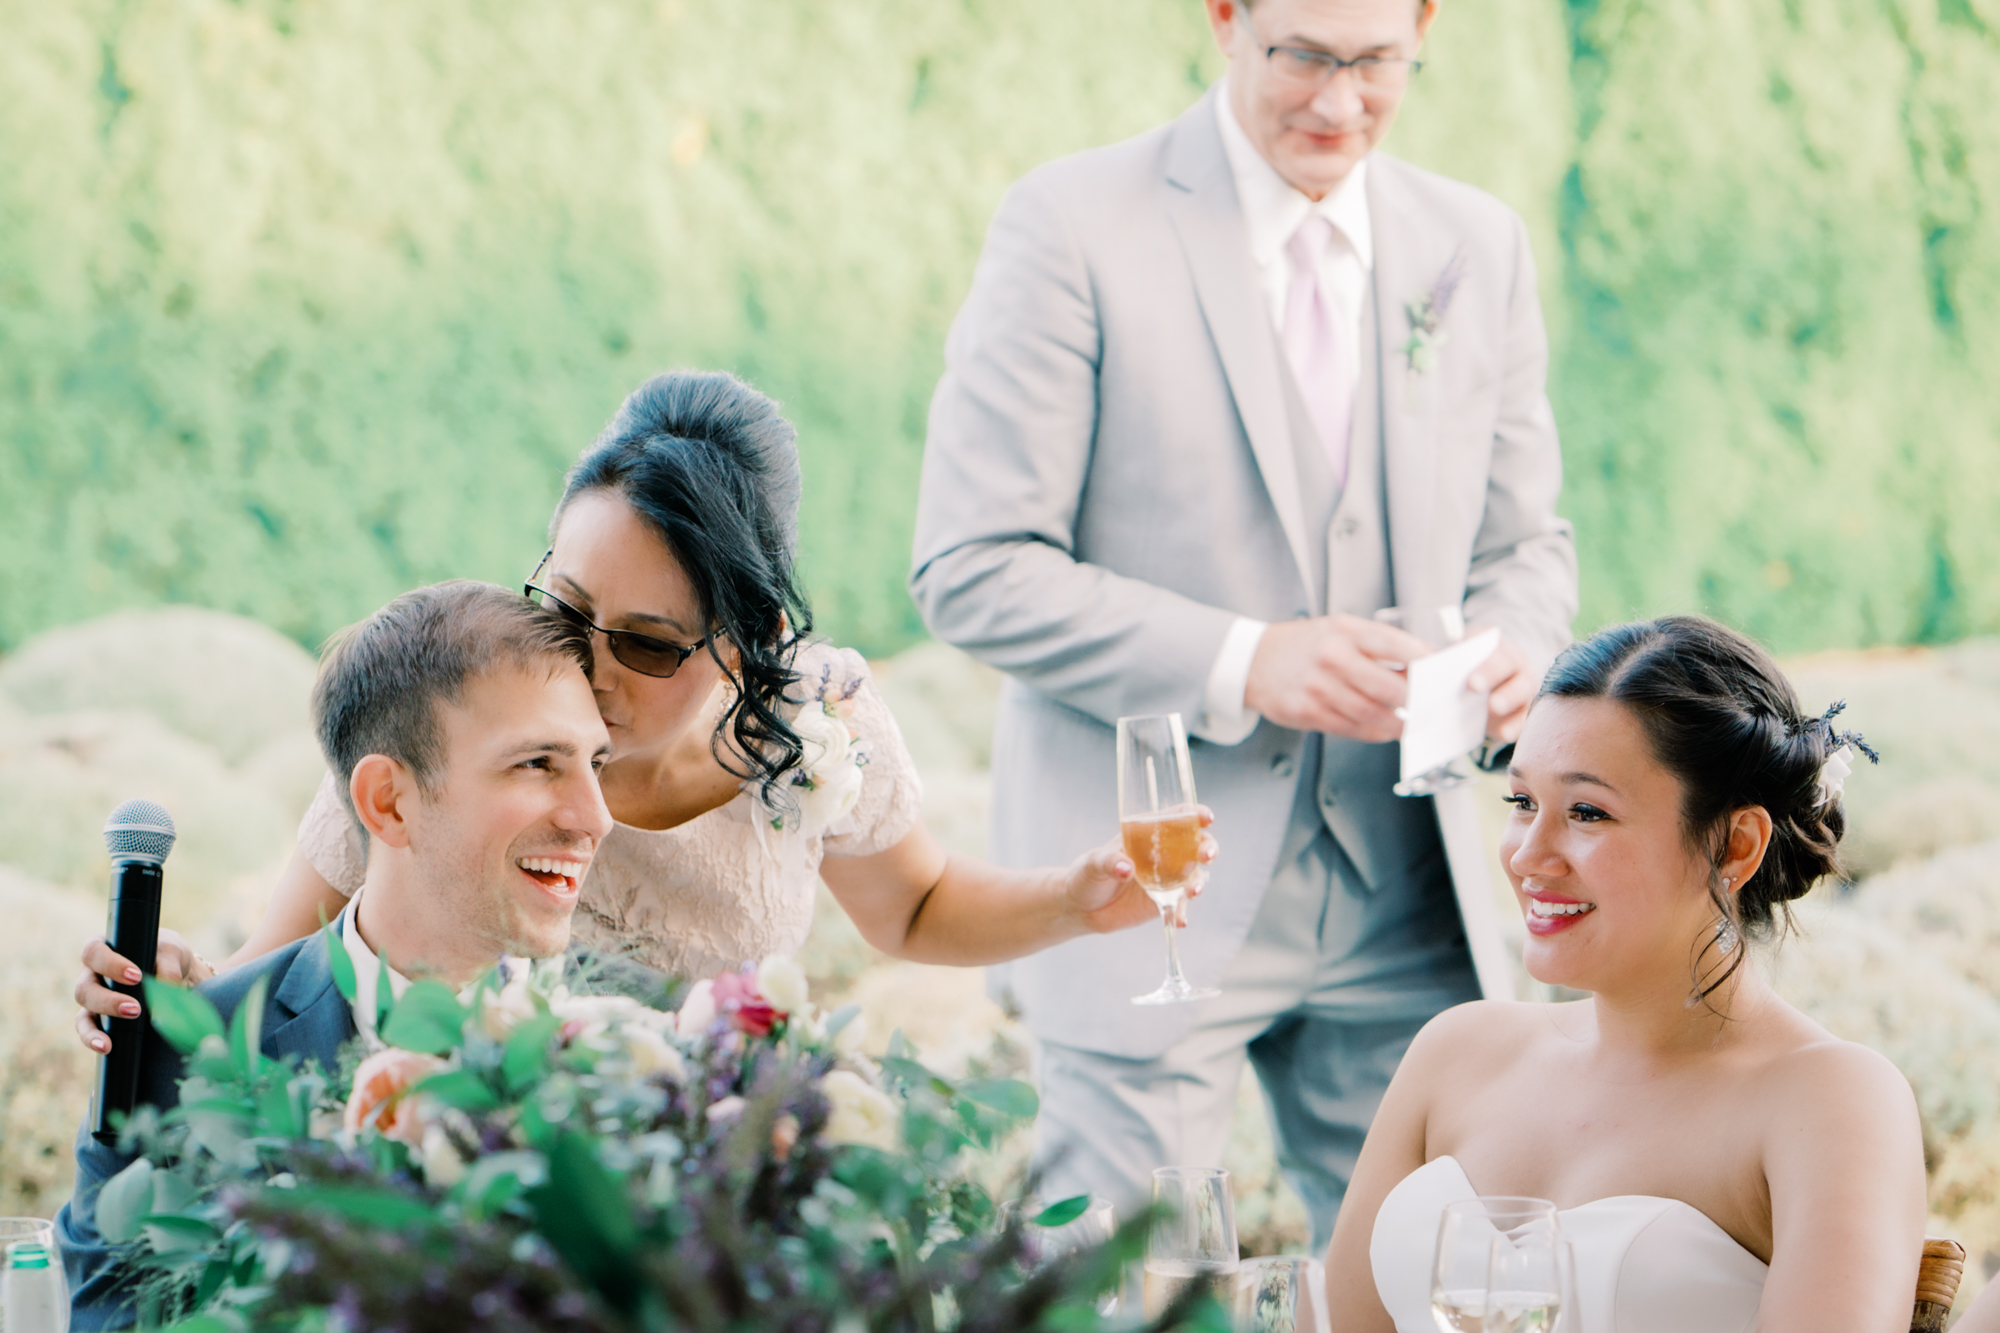 Woodinville Lavender Farm weddings: Reception moments